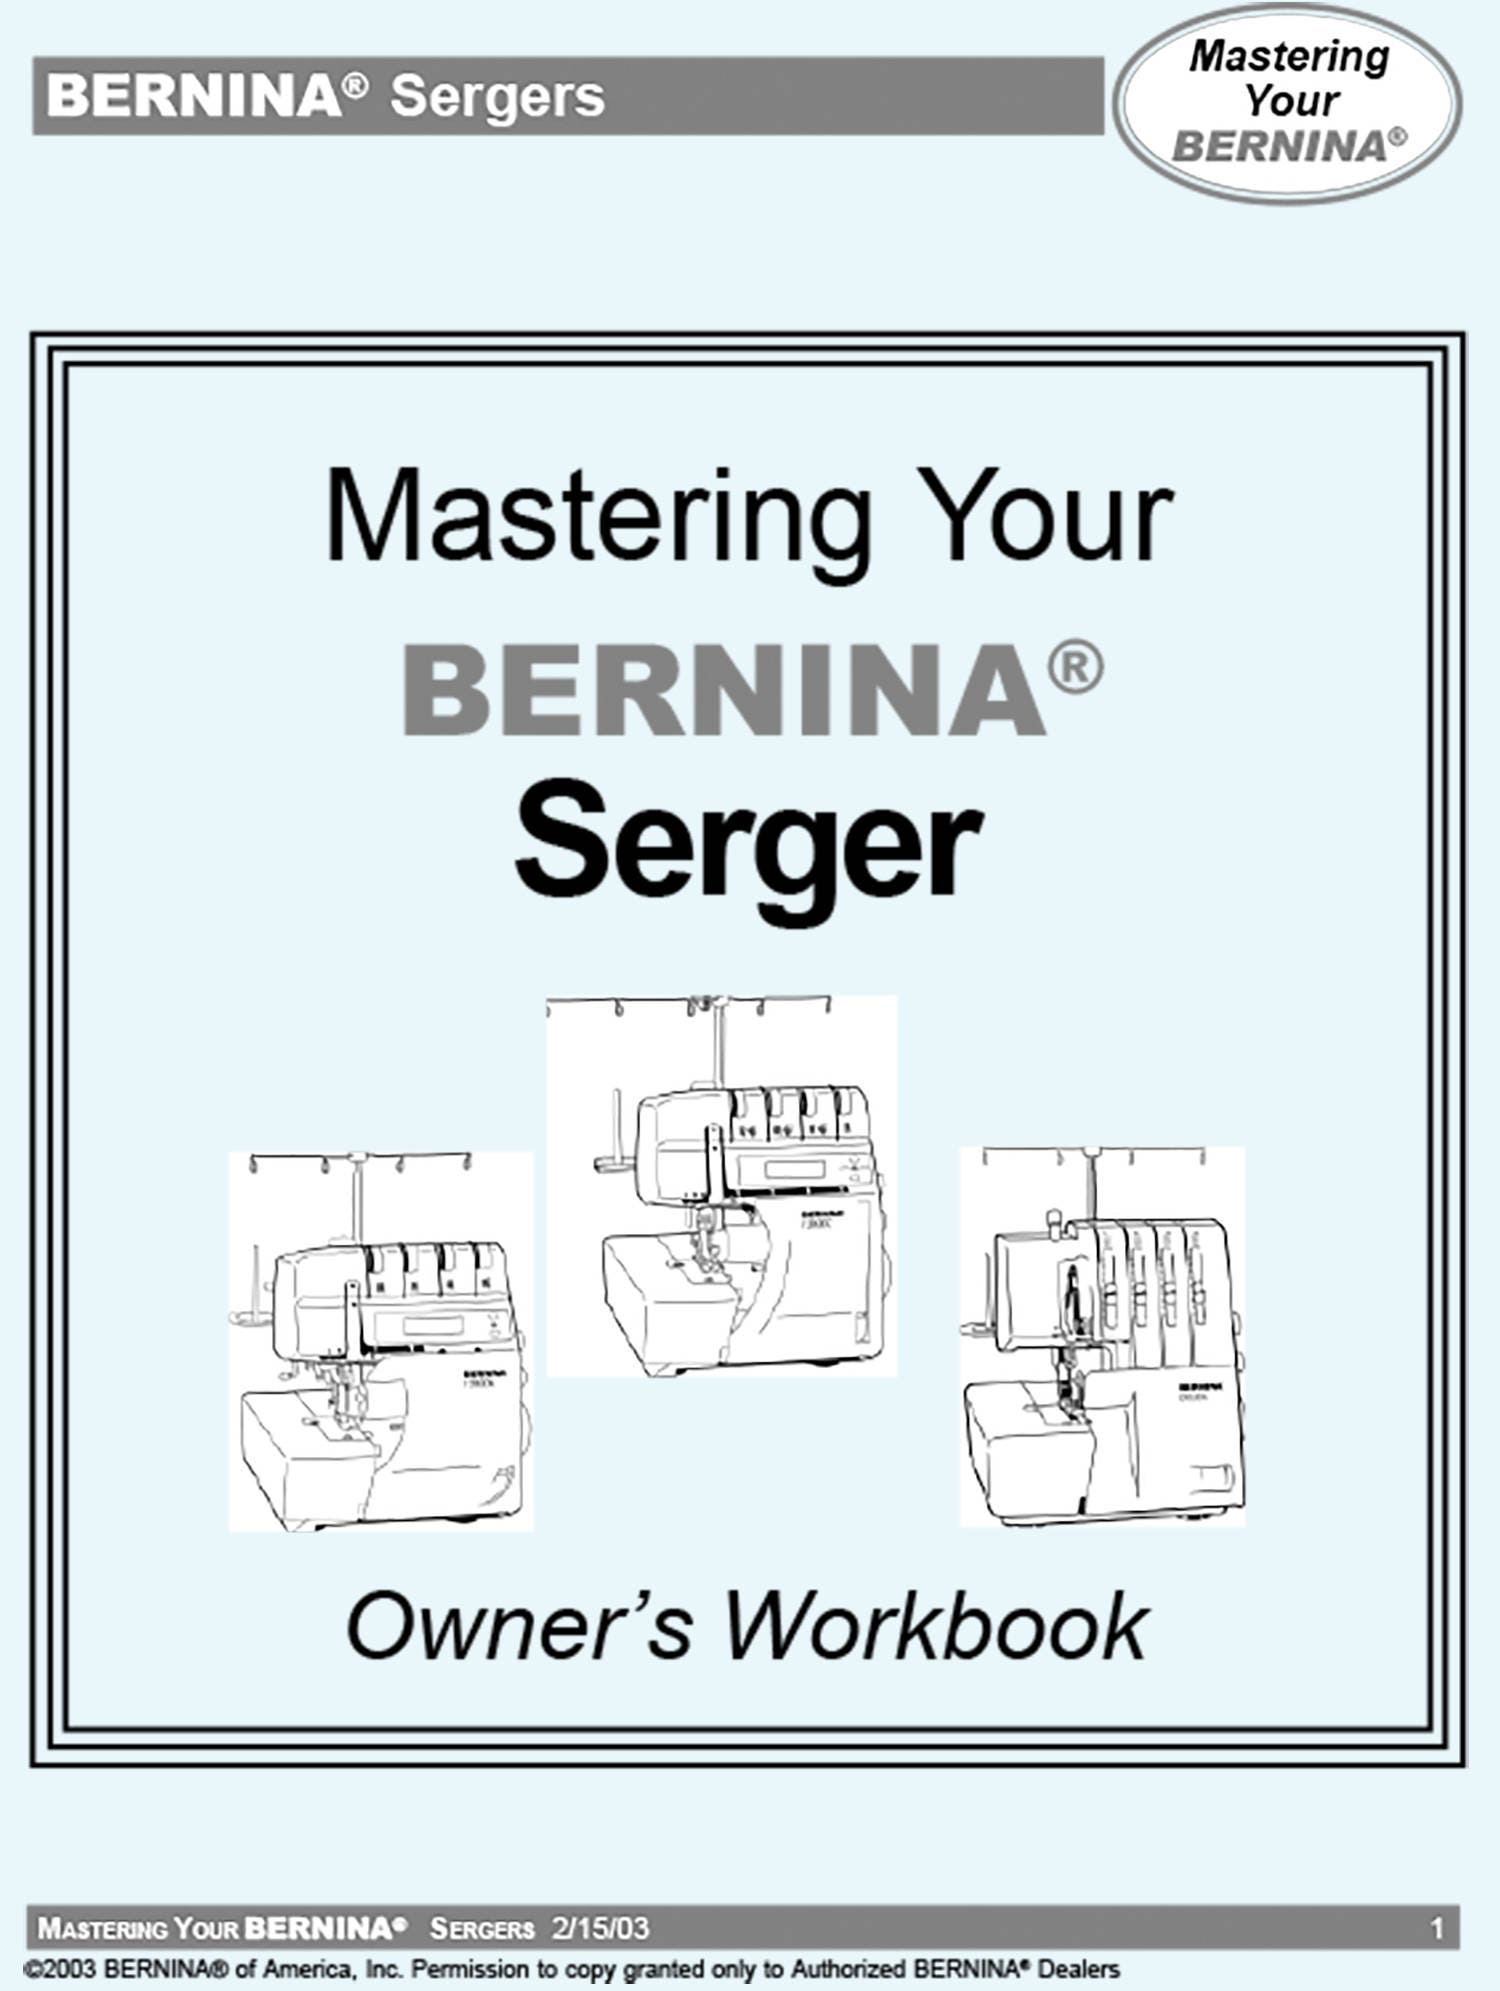 Sewing Machine Tools, Overlock & Serger Service Kit.